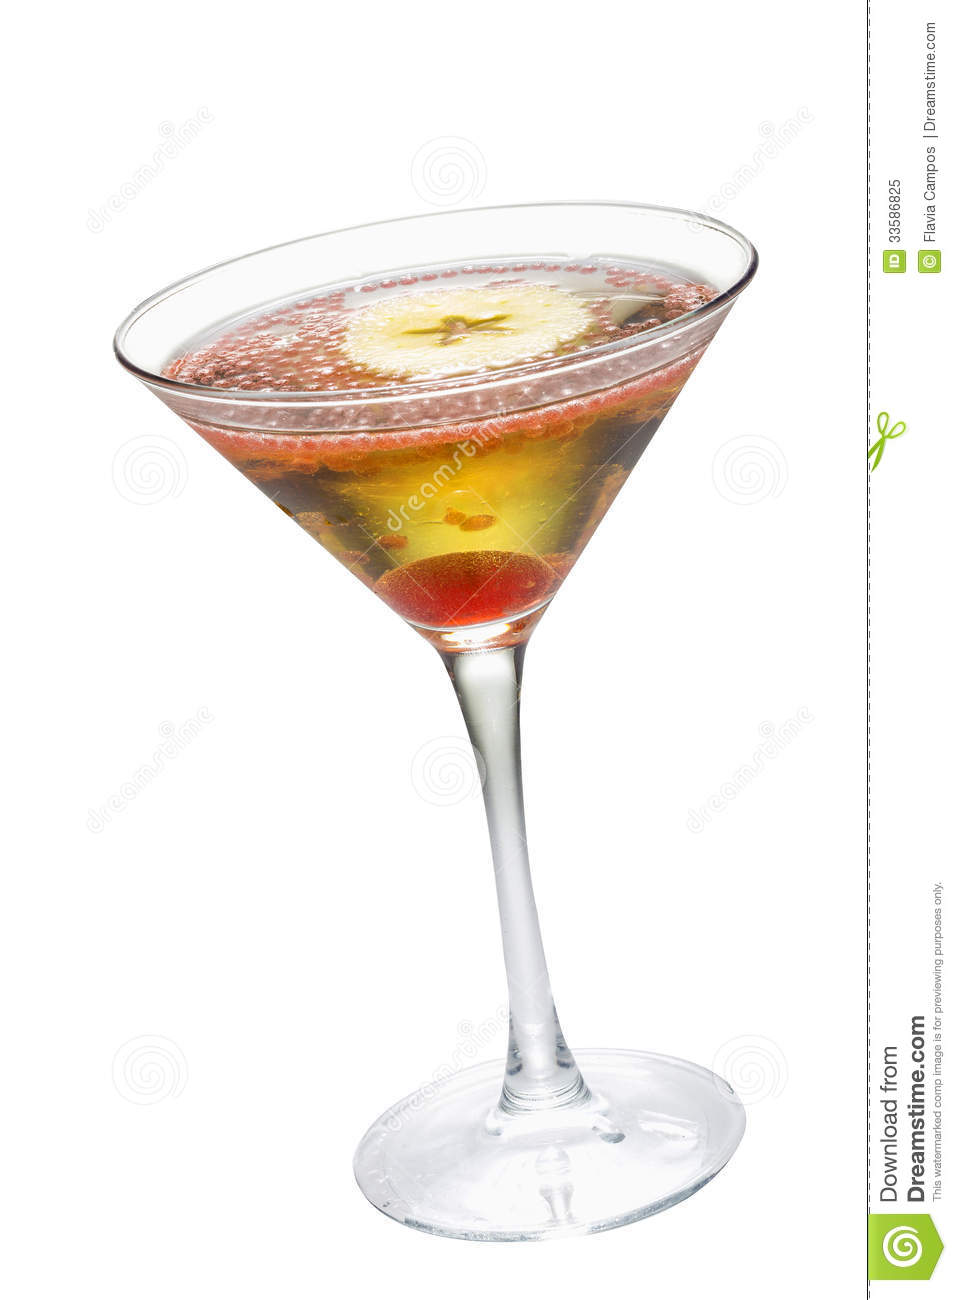 Apple Martini Royalty Free Stock Photo   Image  33586825